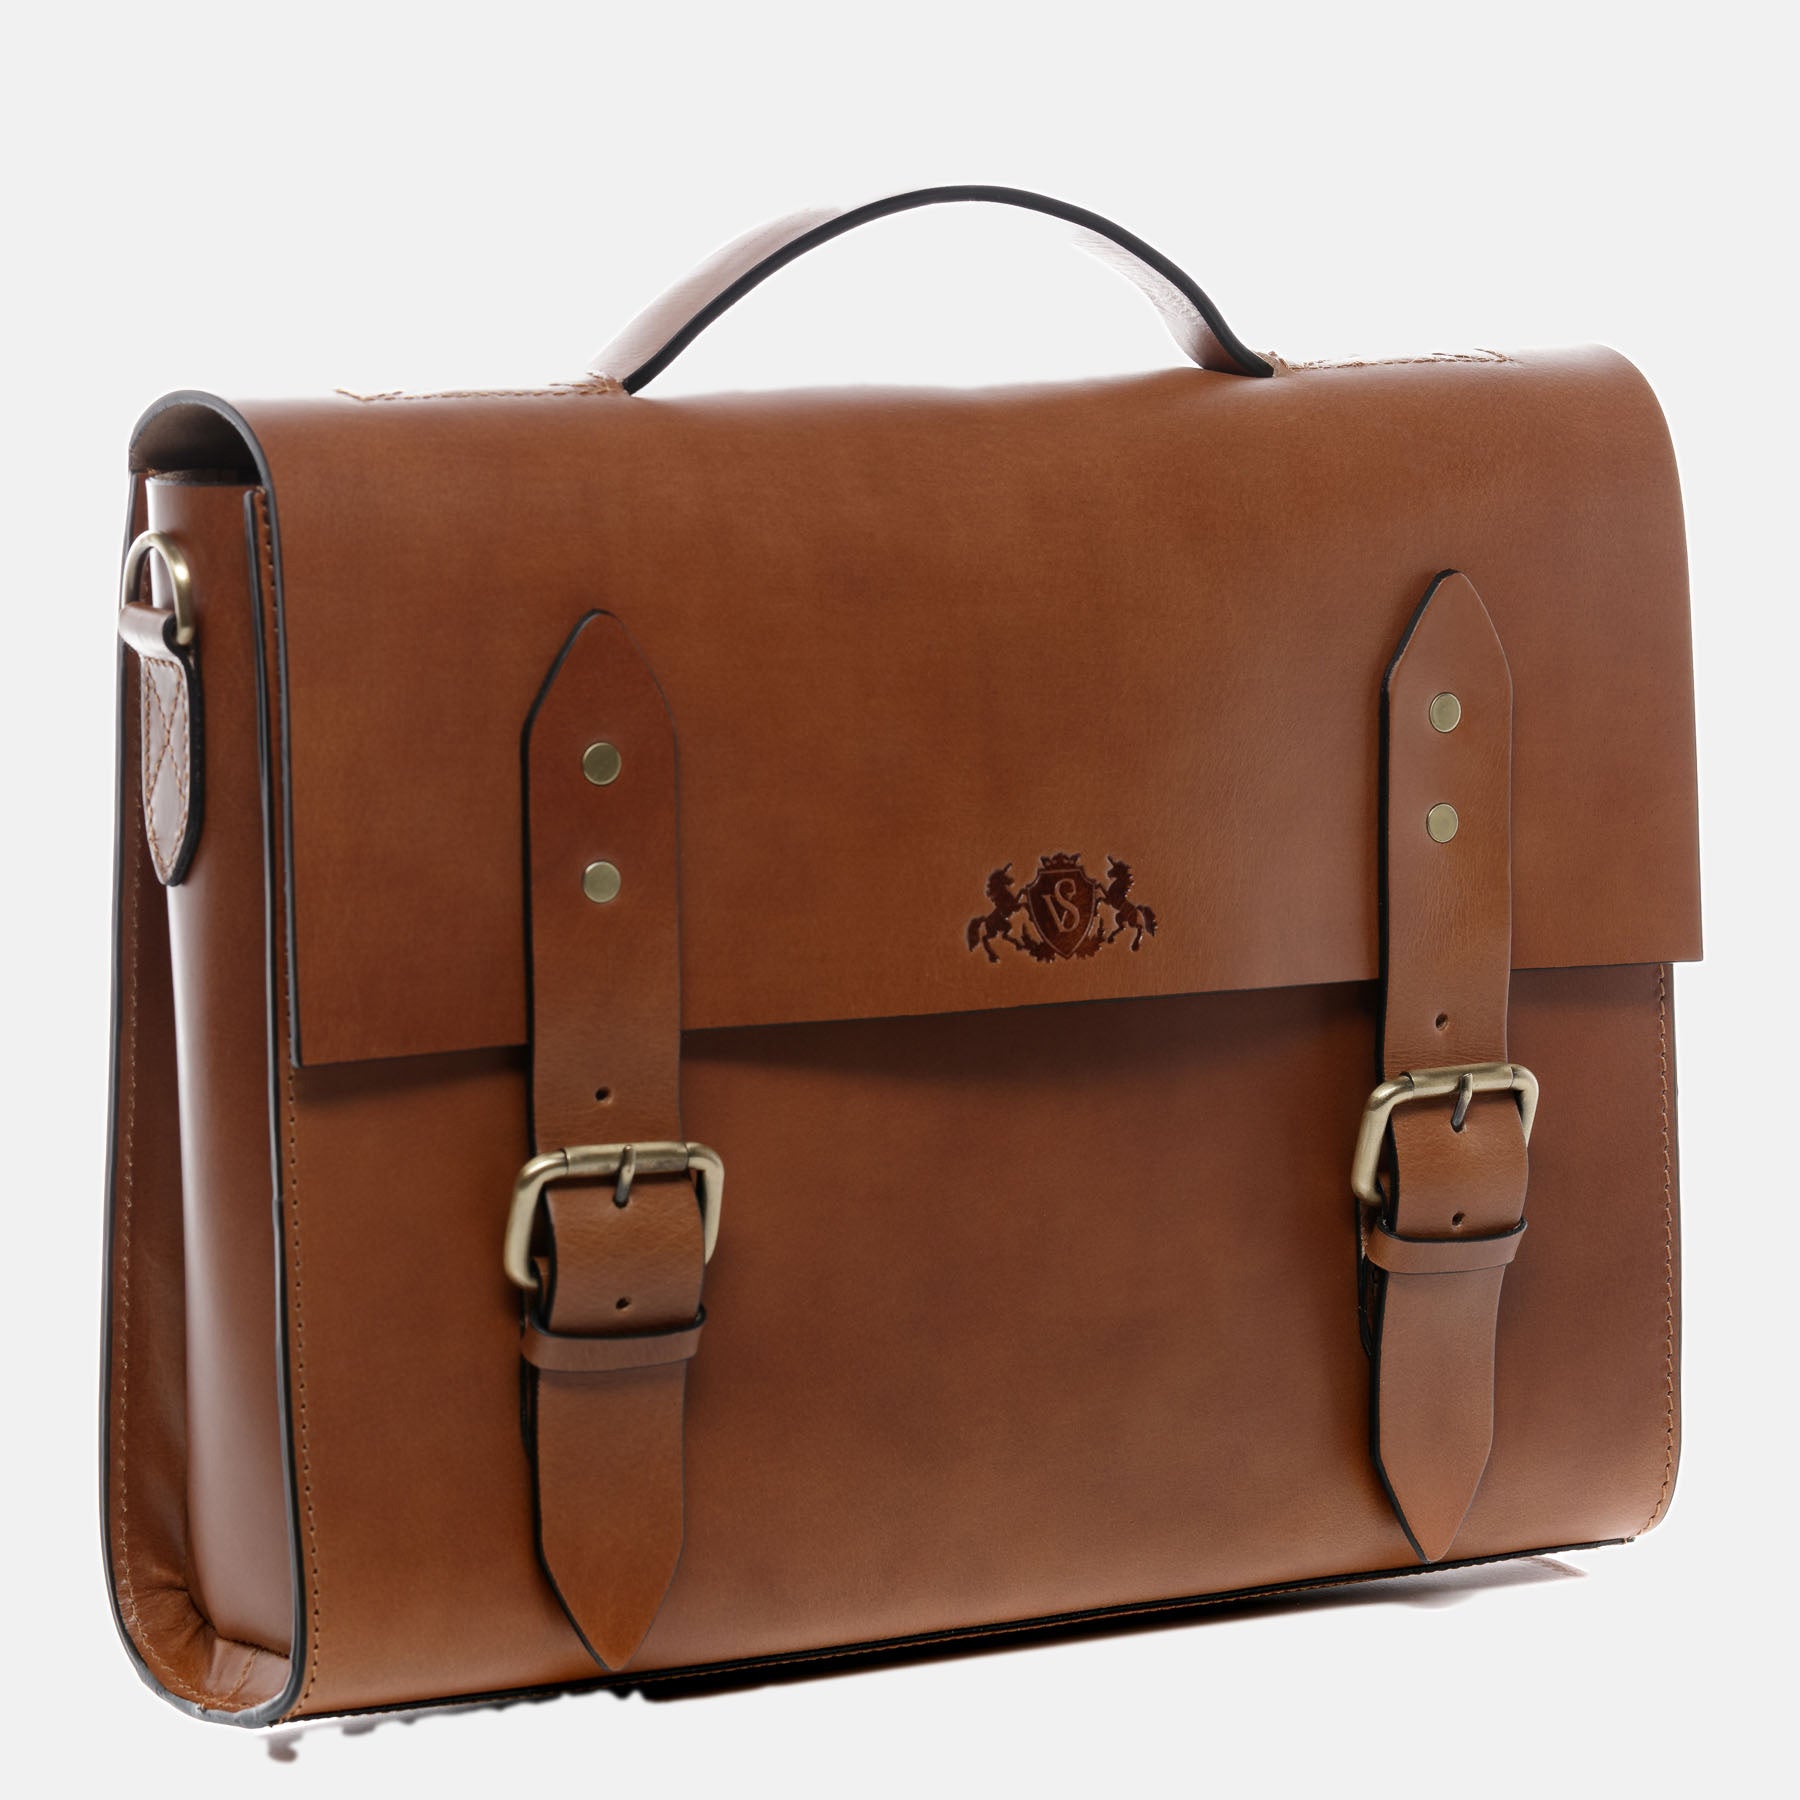 Briefcase BOSTON saddle leather light brown-cognac